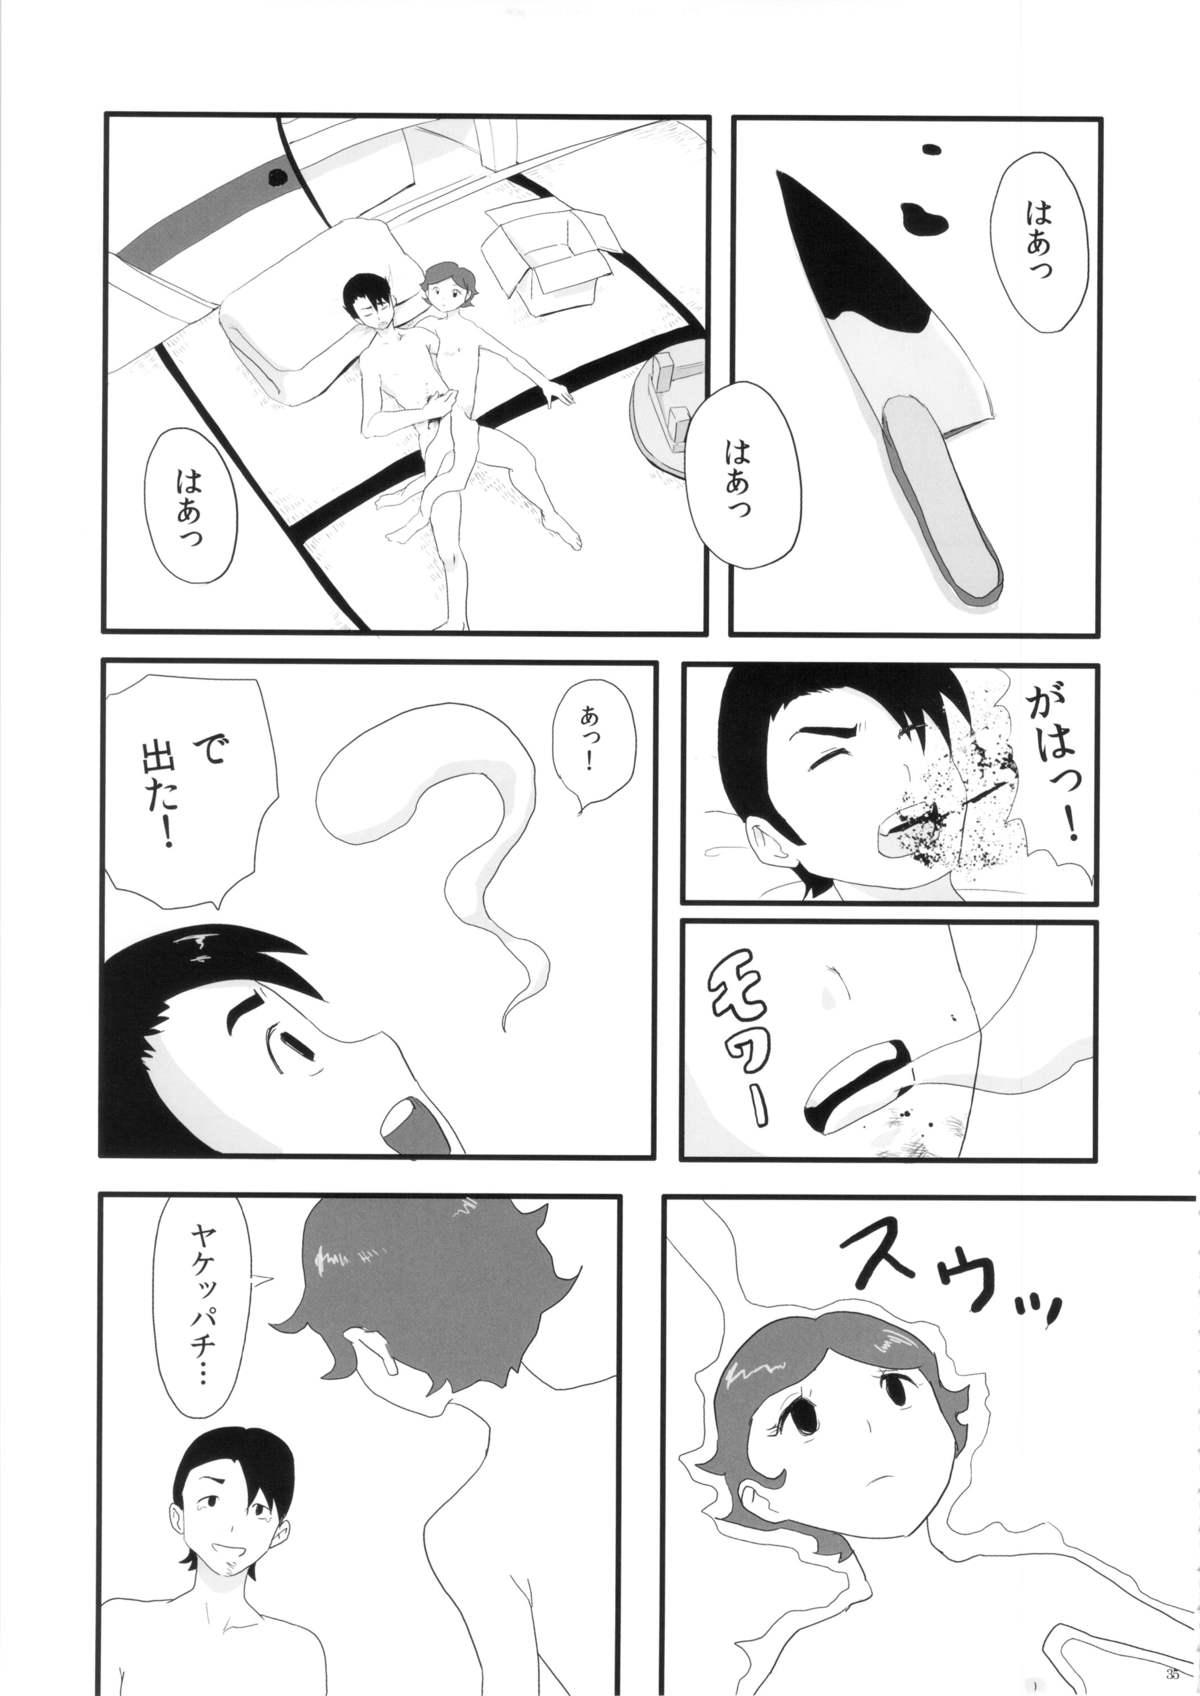 FLOUR2 Tezuka Manga Graffiti 34